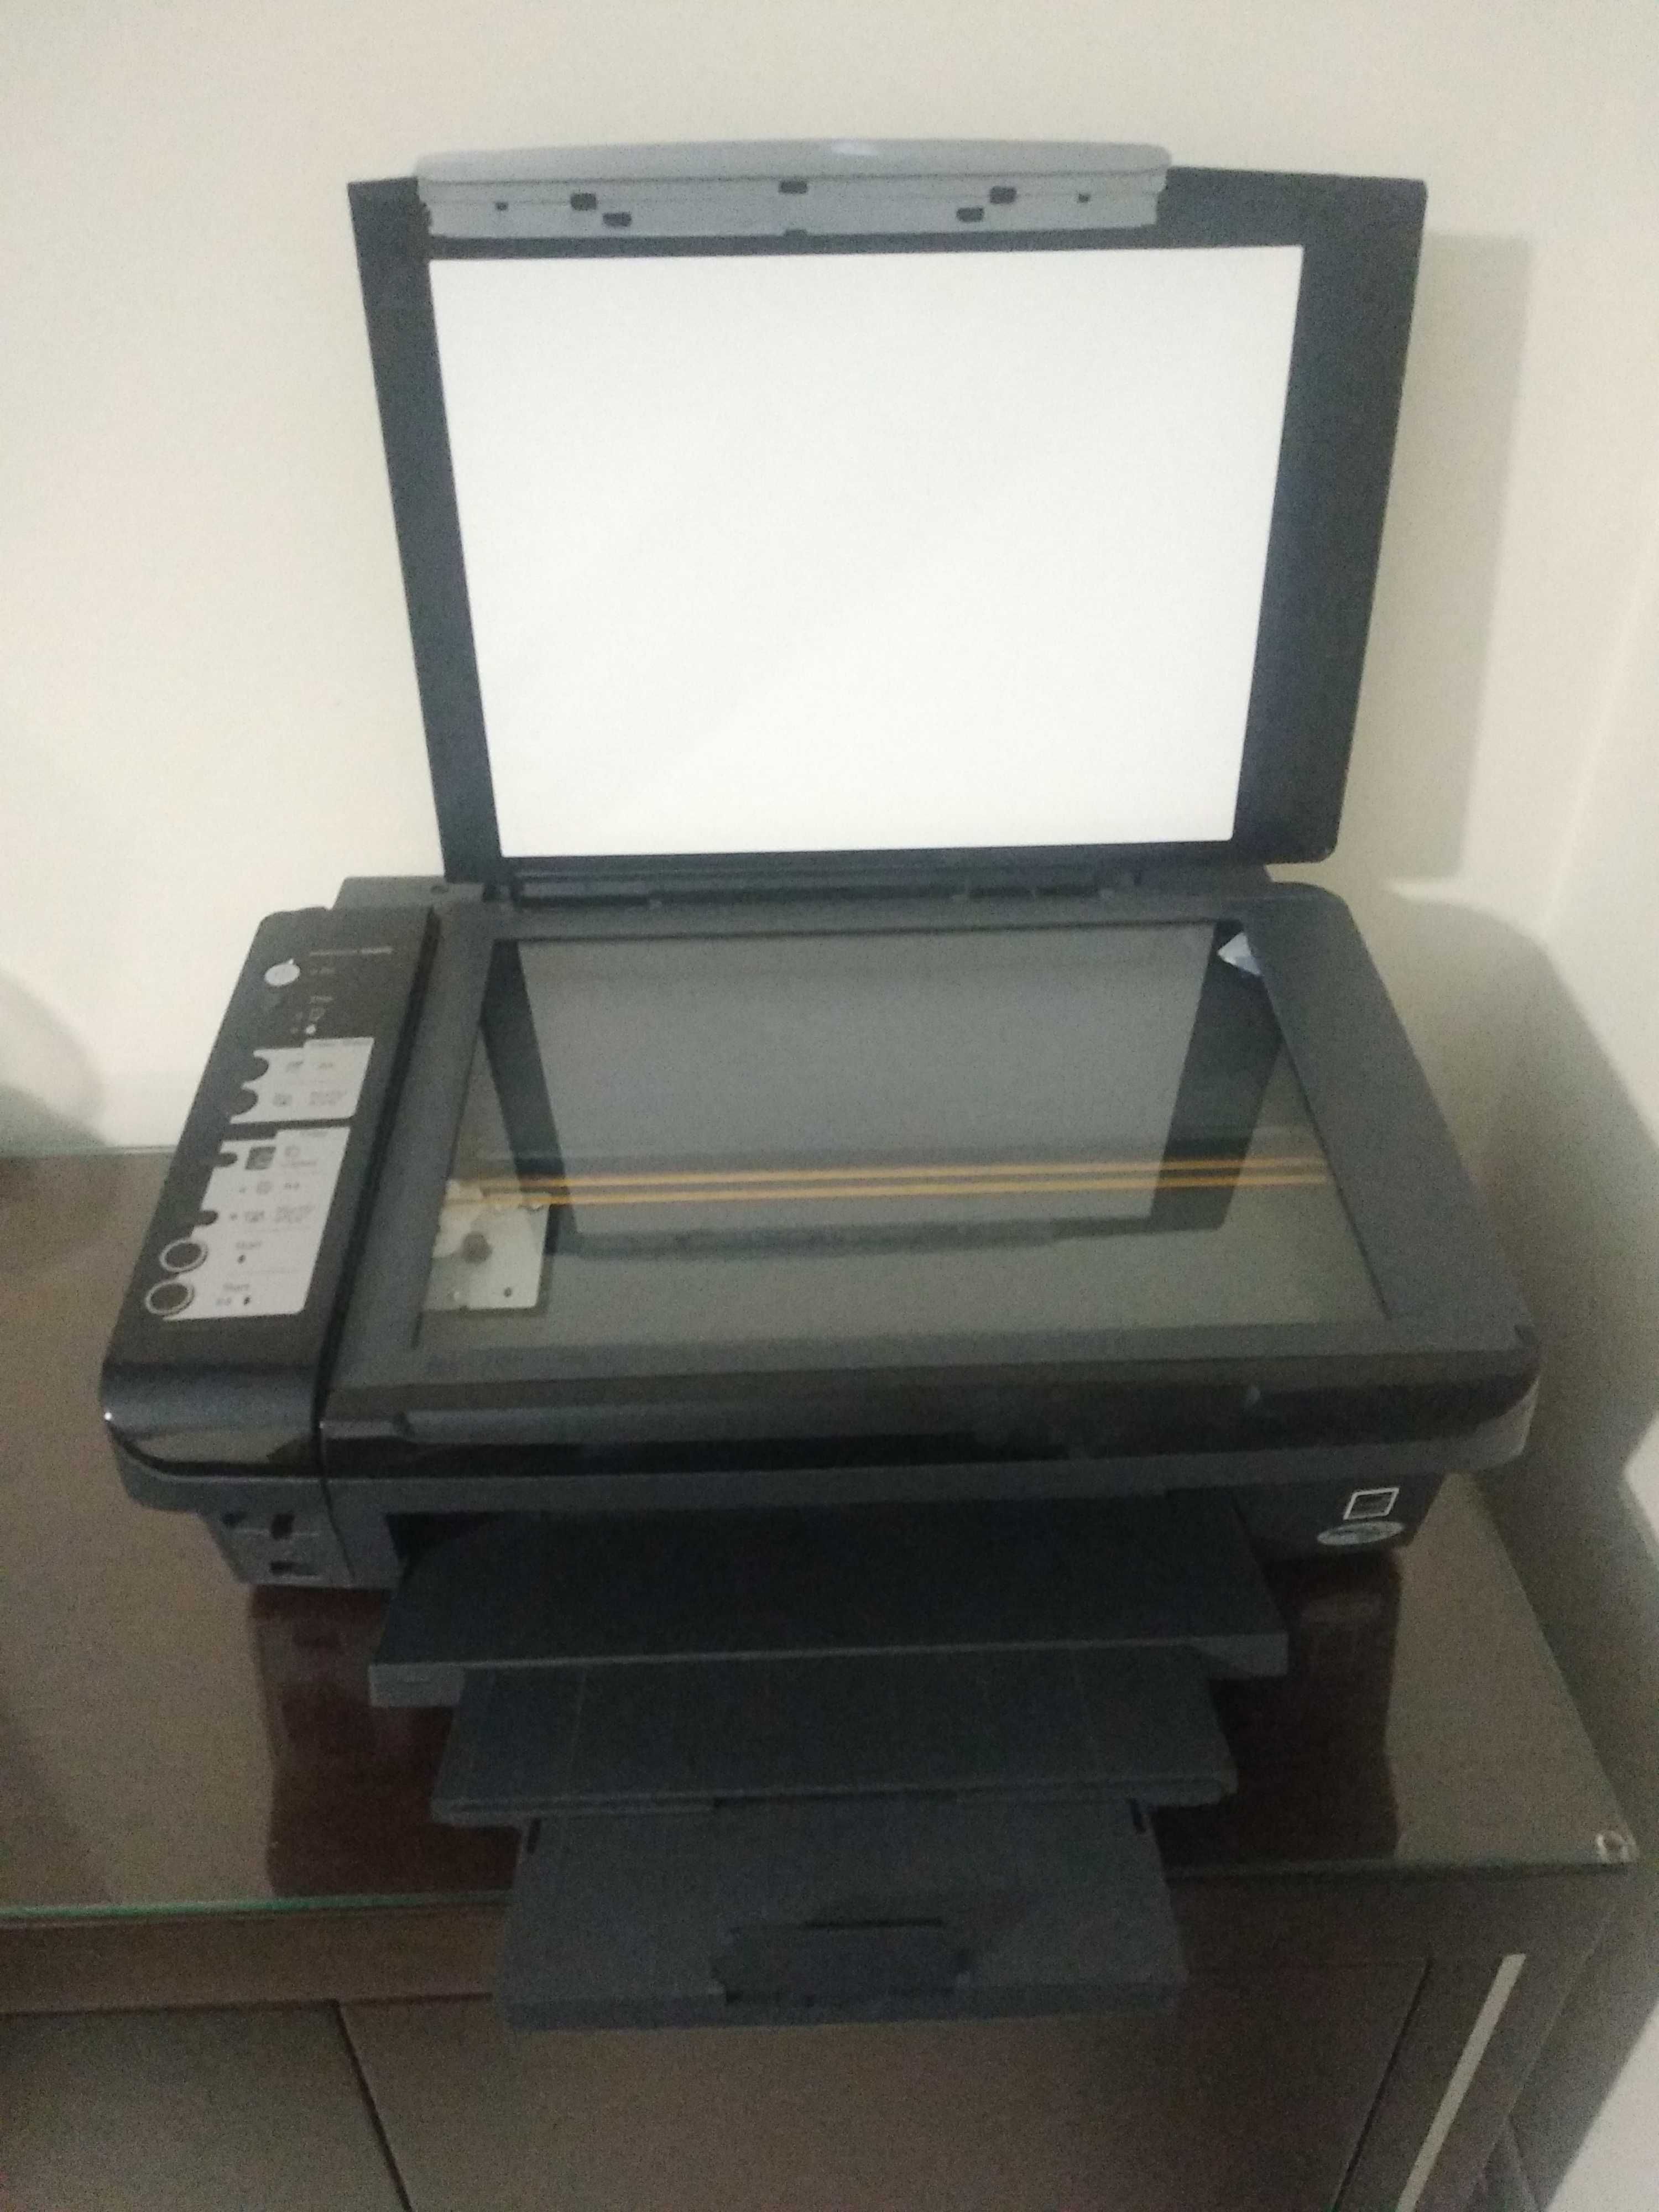 Impressora, scanner e fotocopiadora Epson Stylus SX200